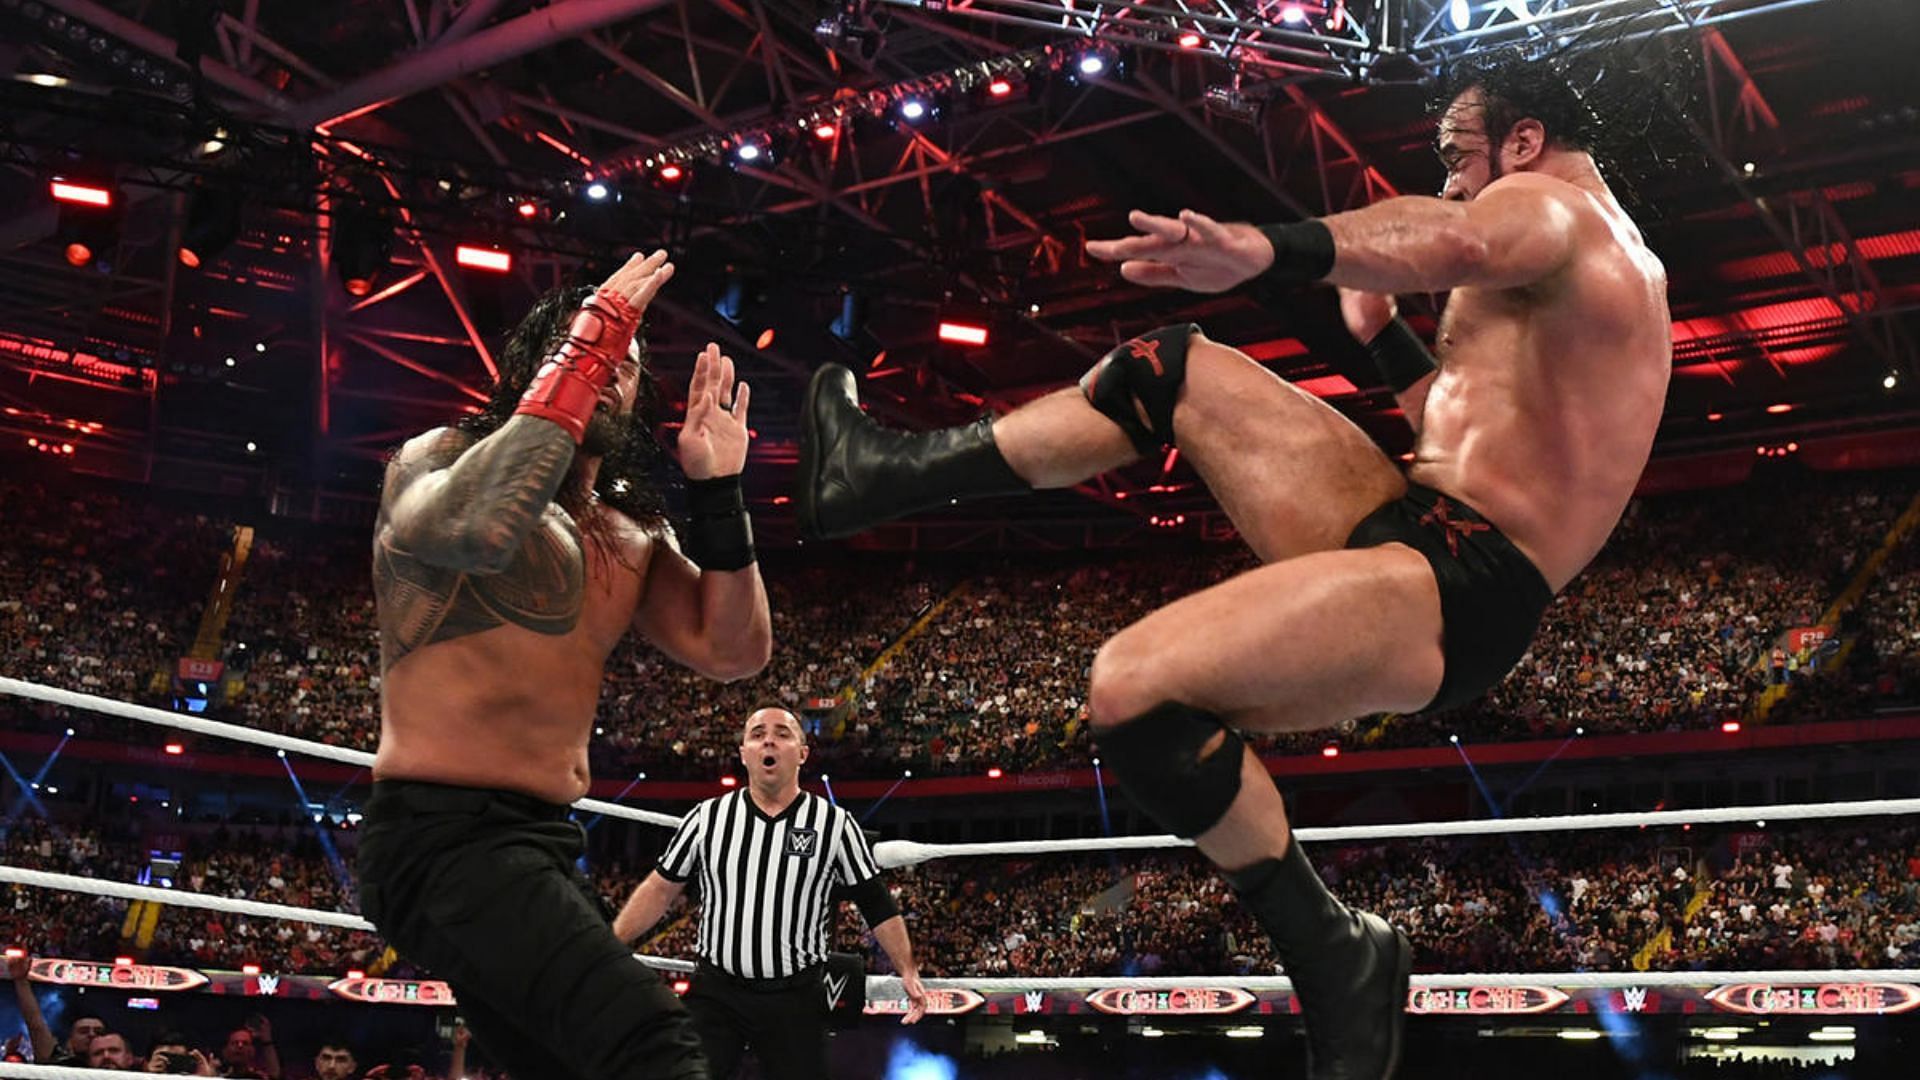 WWE Superstars, Roman Reigns and Drew McIntyre